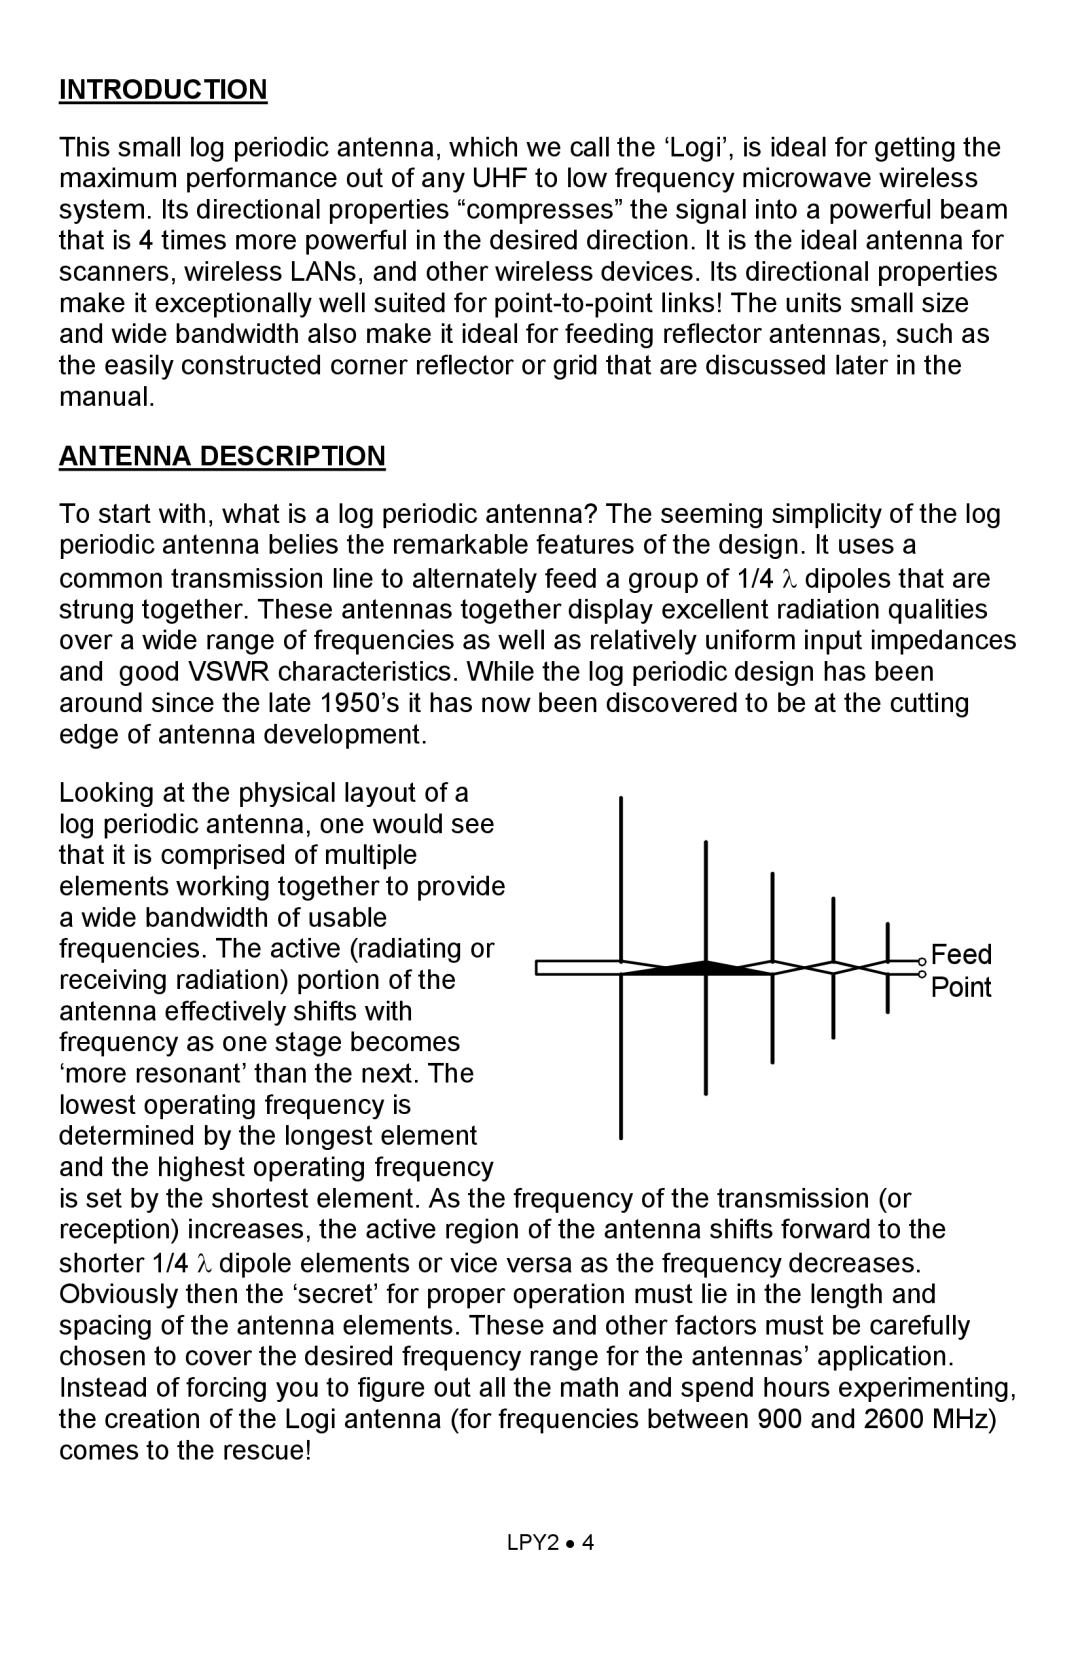 Ramsey Electronics LPY915 manual Introduction, Antenna Description 